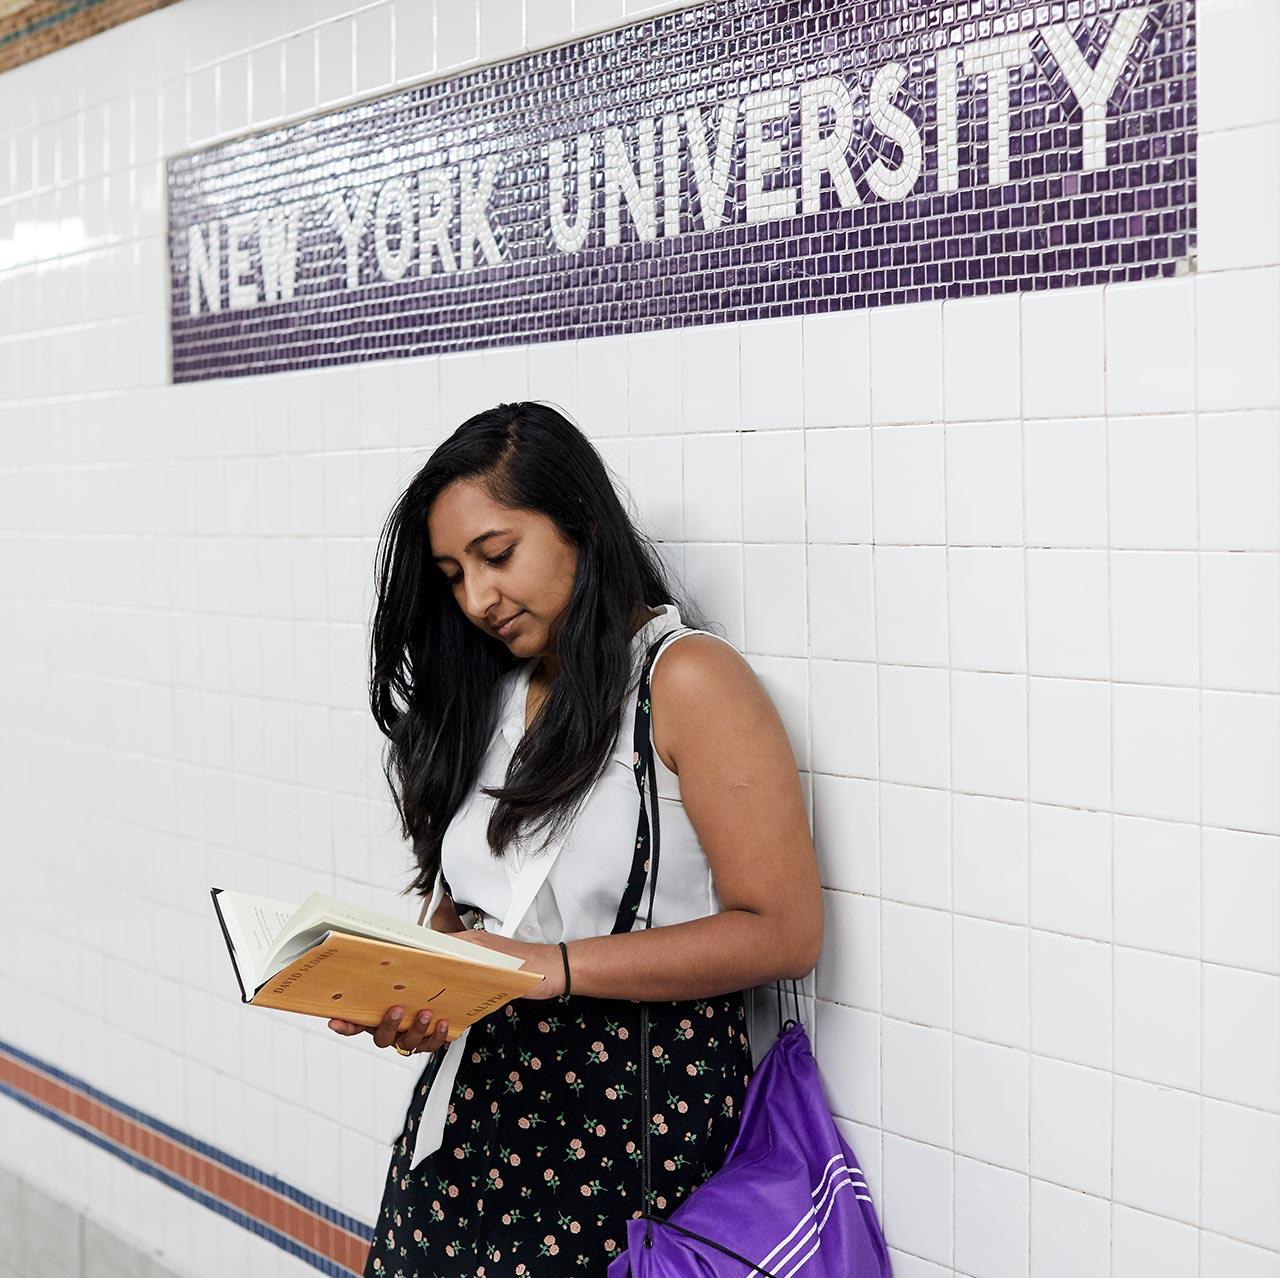 NYU student reading a book on a subway platform.